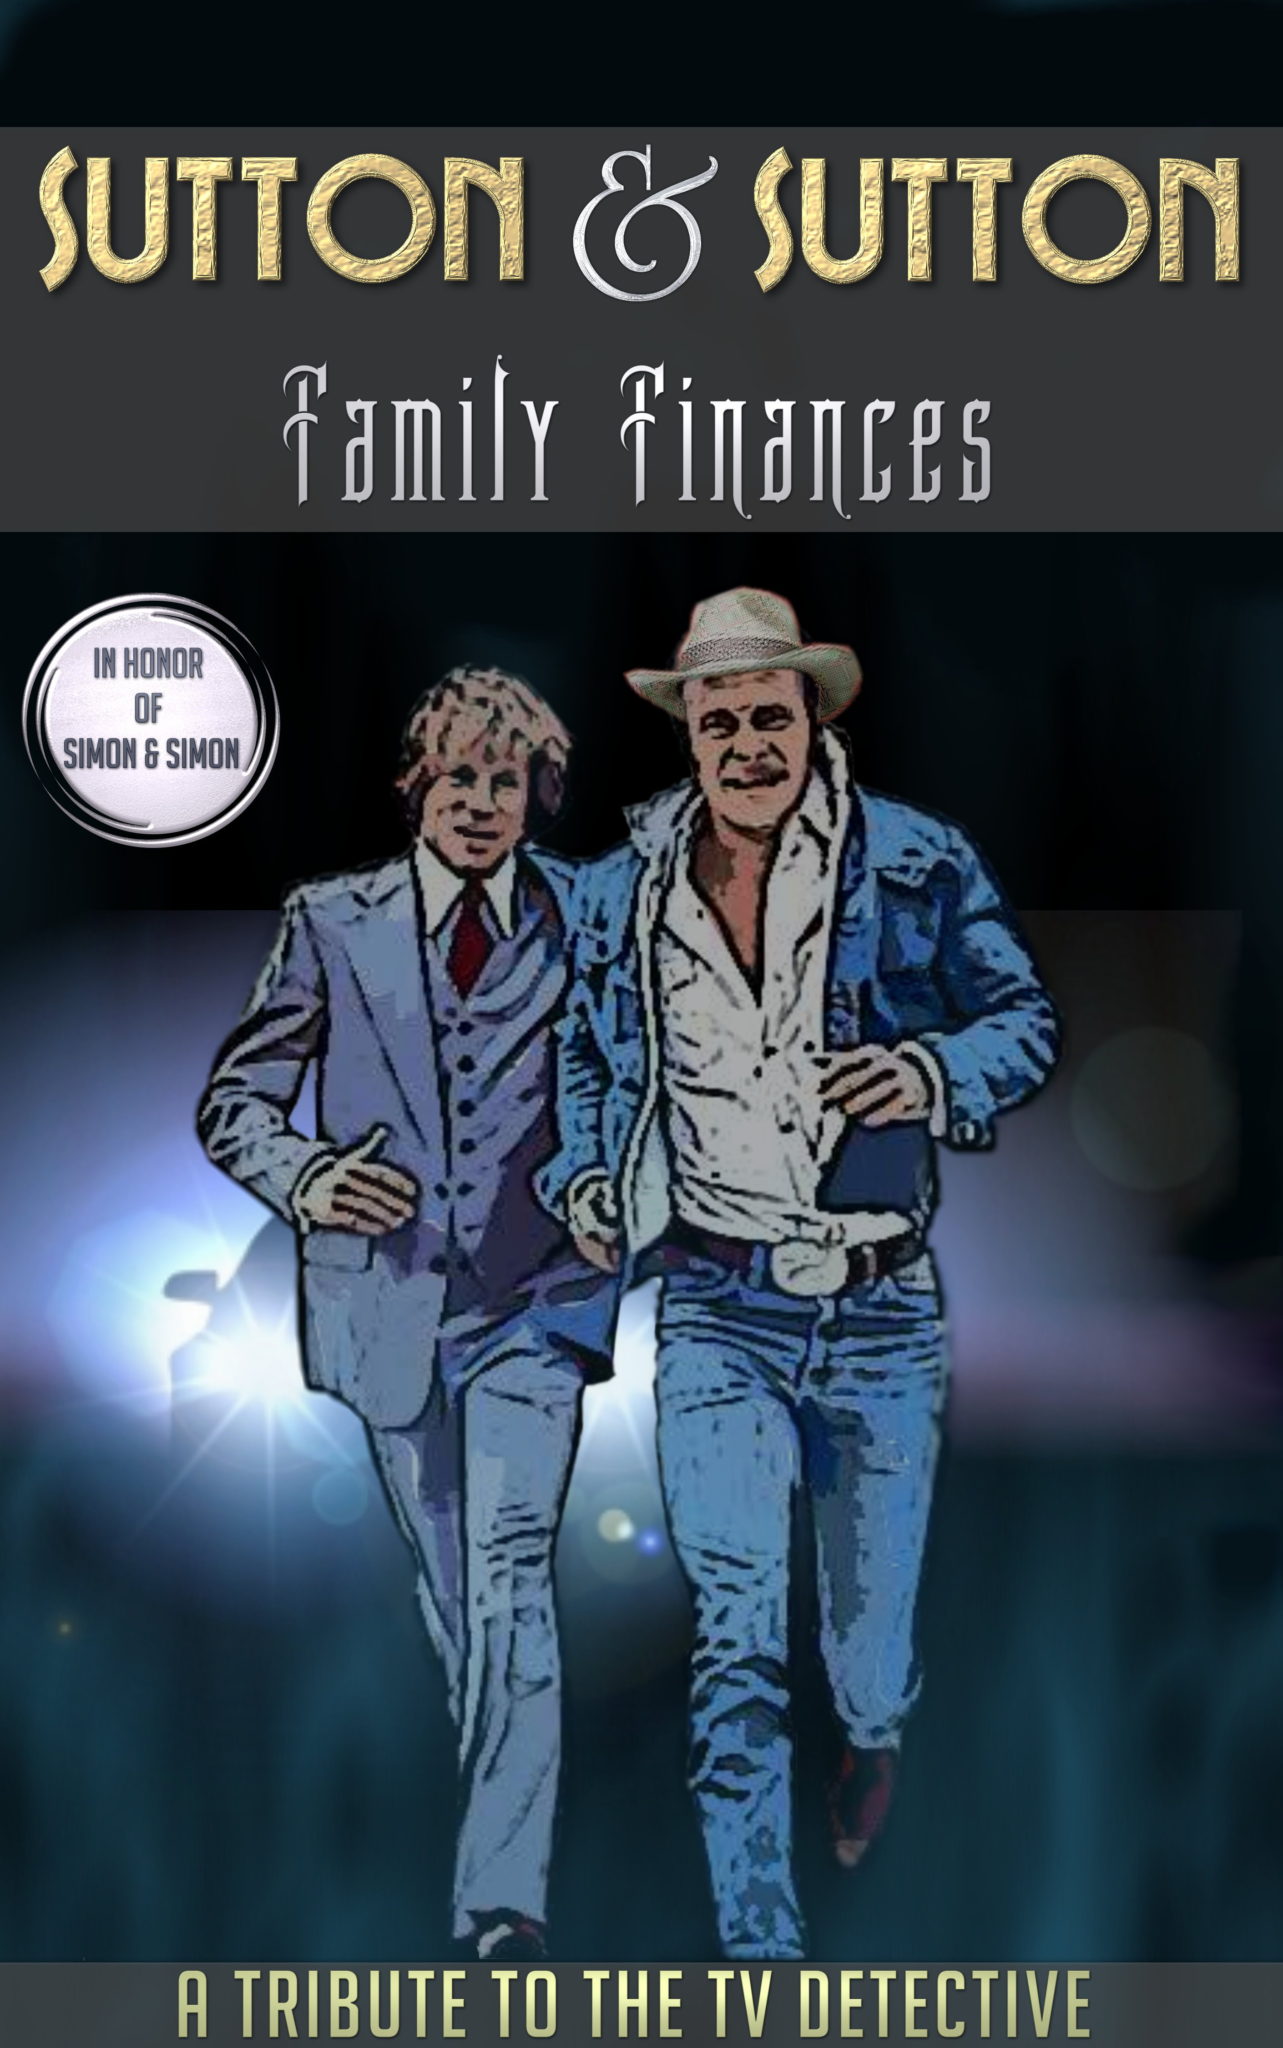 FREE: Sutton & Sutton – In Honor of Simon & Simon: Family Finances by Michael Volpi